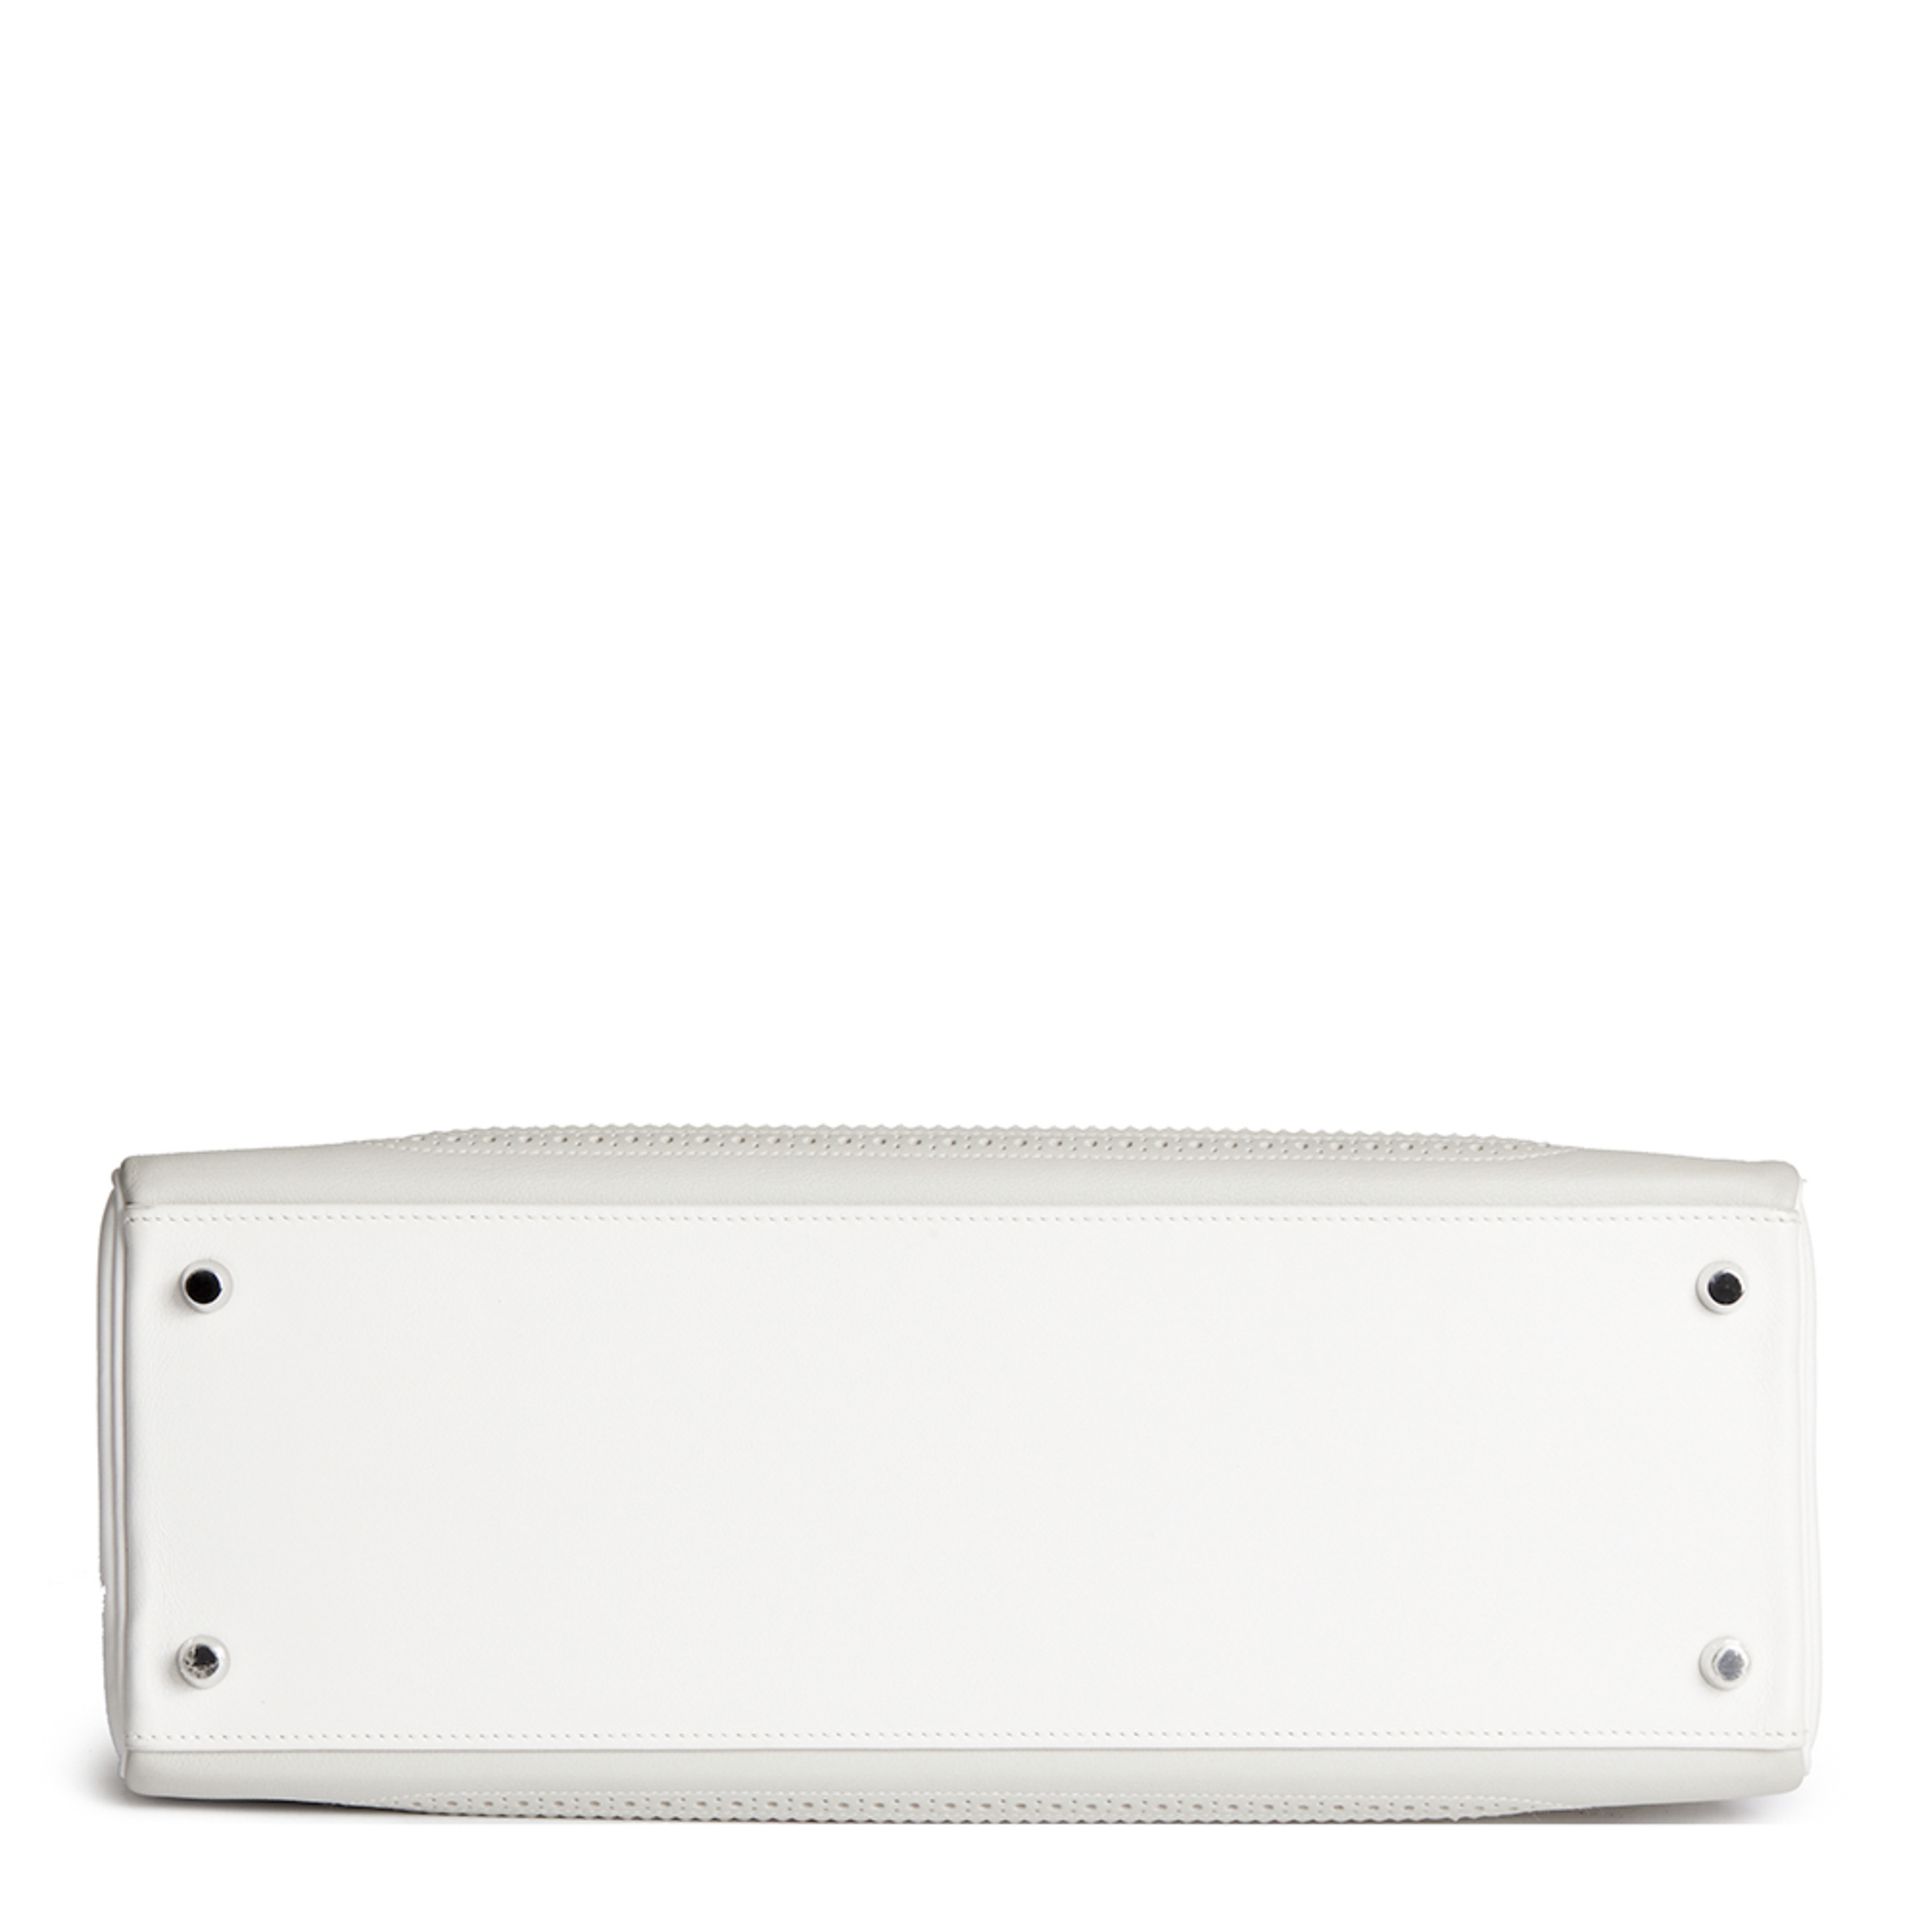 Hermès White & Gris Perle Swift Leather Ghillie Kelly 35cm Retourne - Image 5 of 9